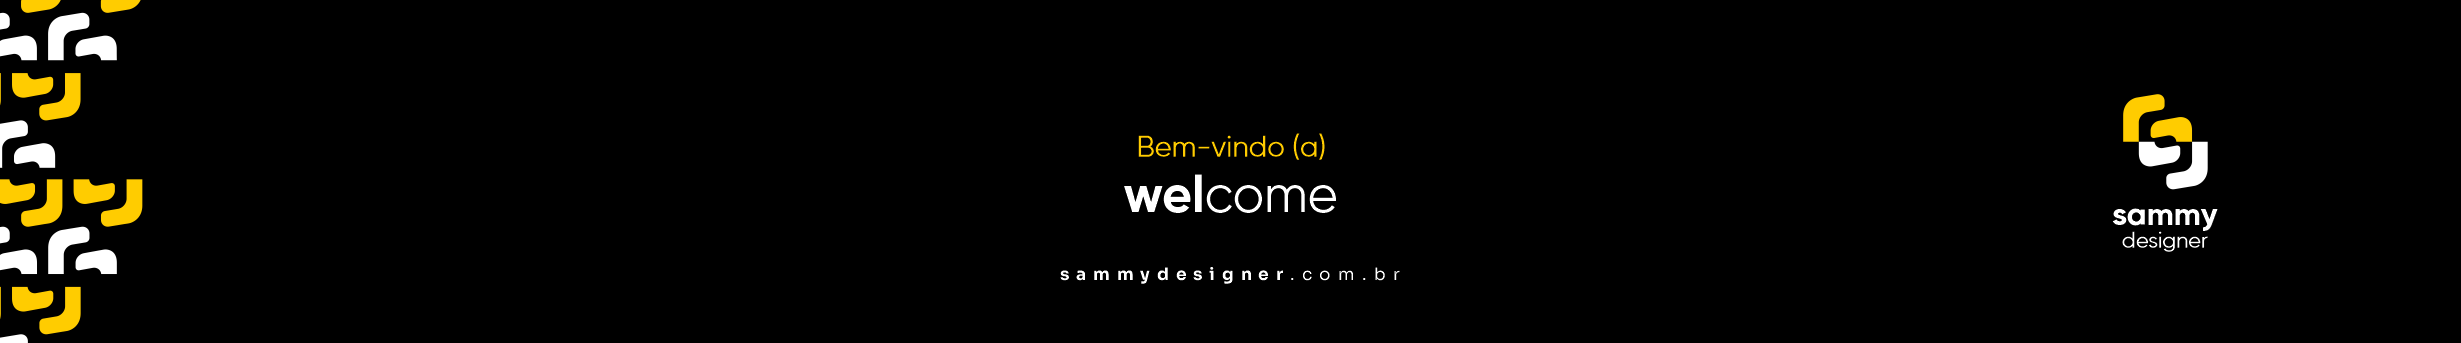 Sammy Designer's profile banner